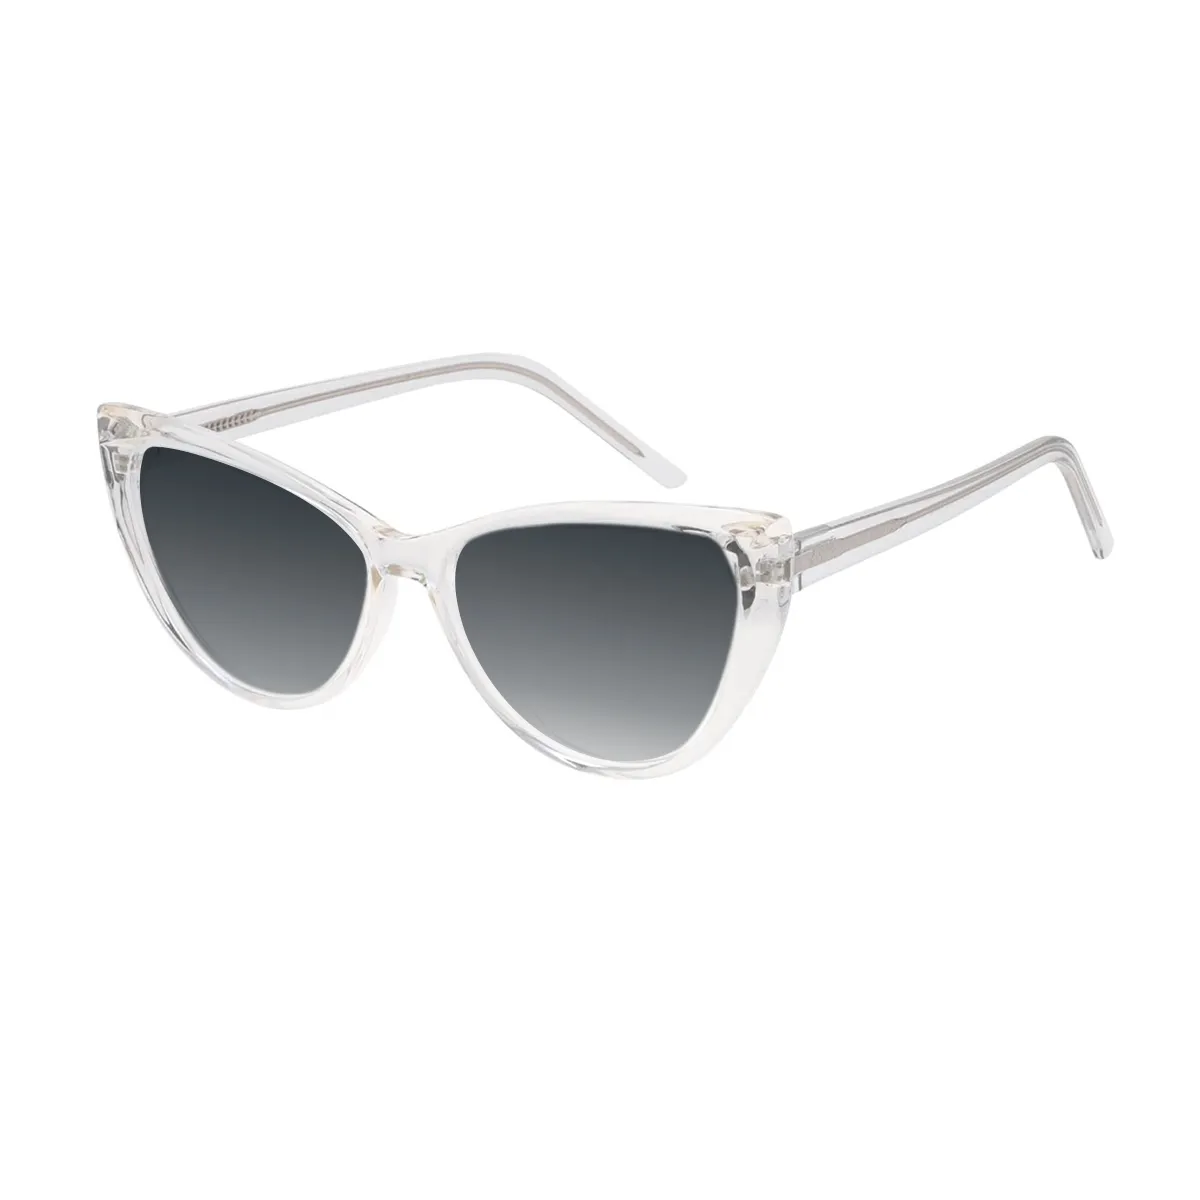 Celia - Cat-eye Translucent Sunglasses for Women